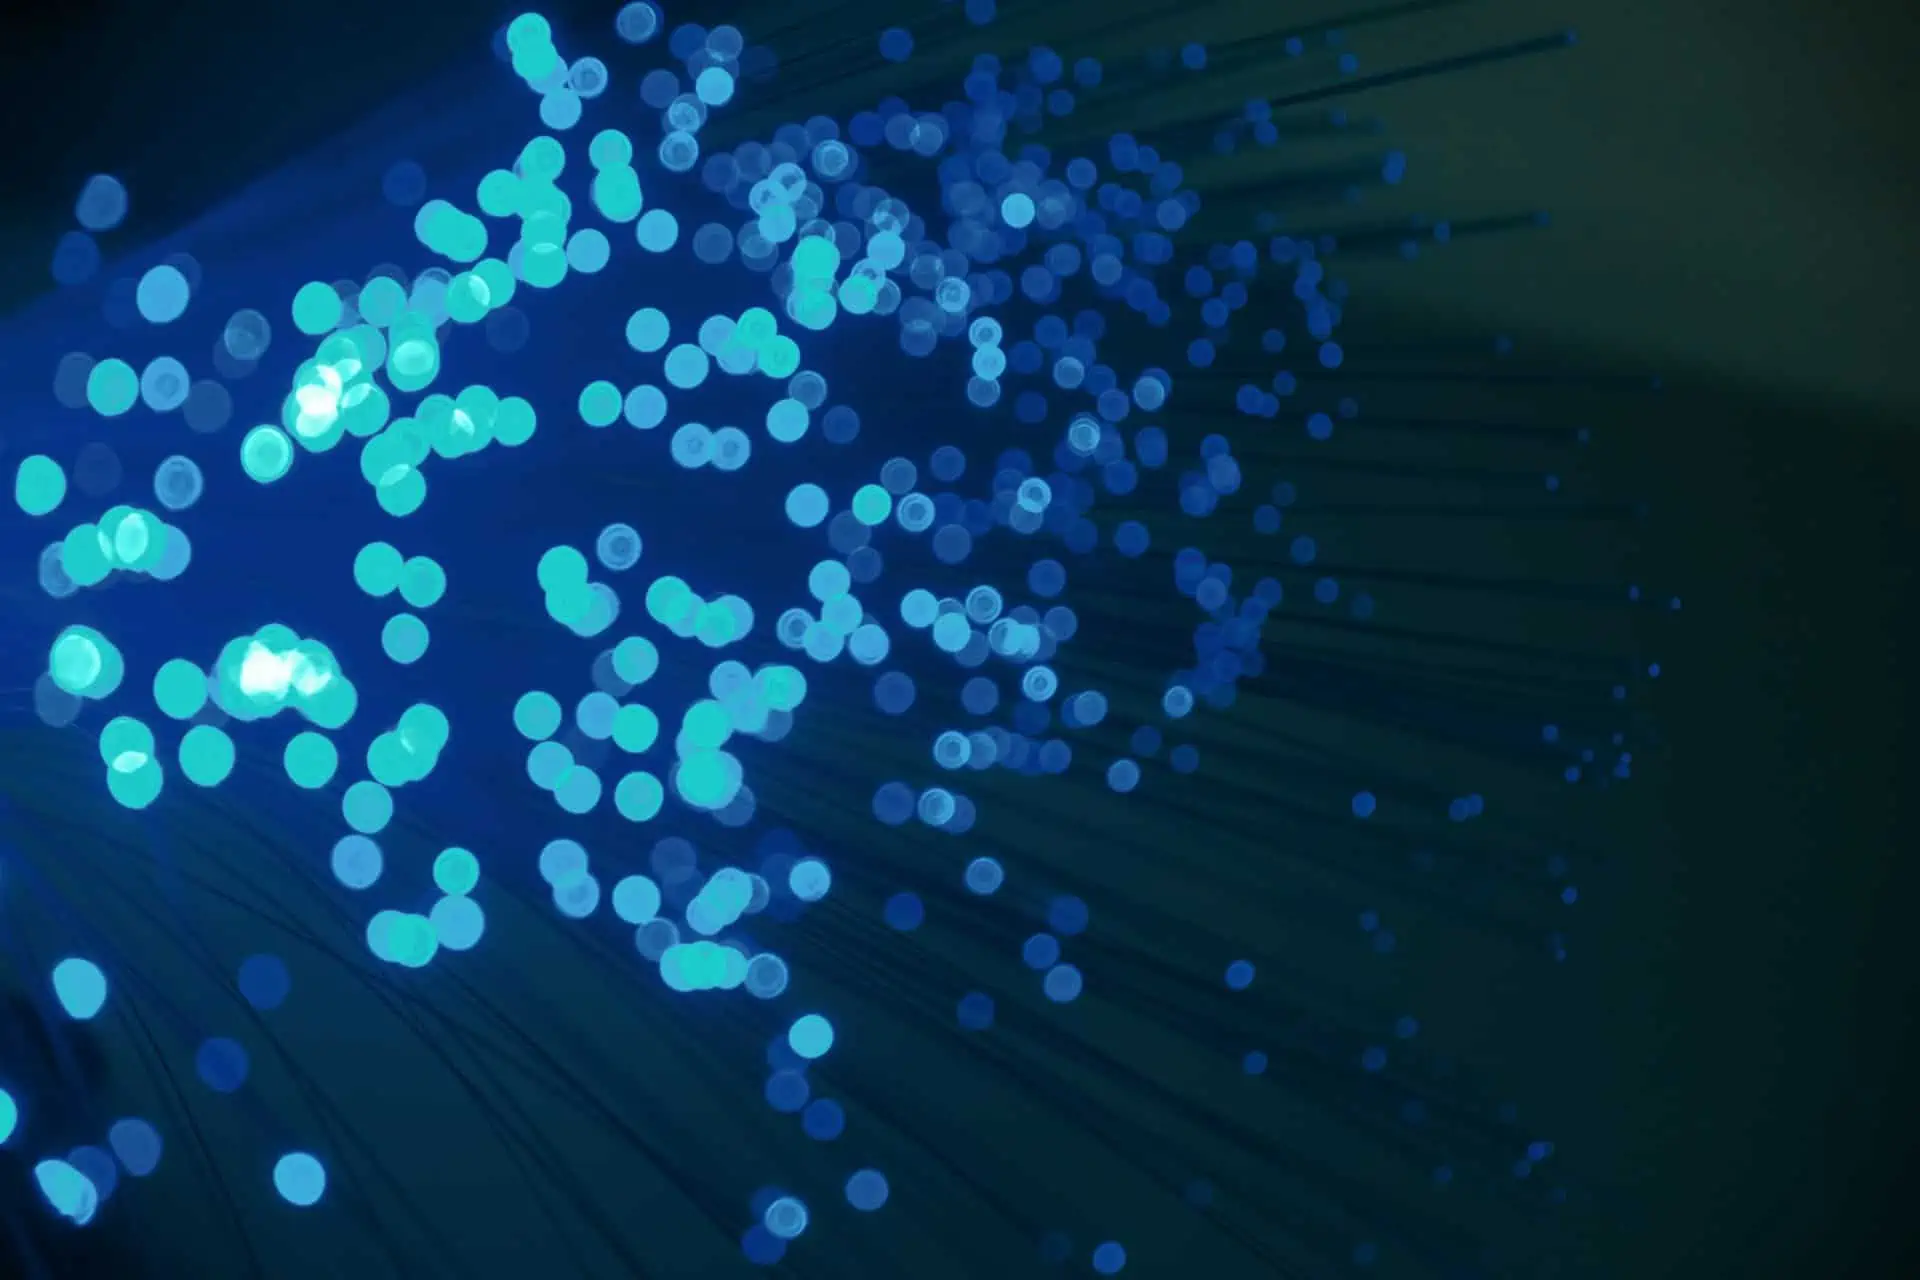 Fiber optic internet cables with blue lights image